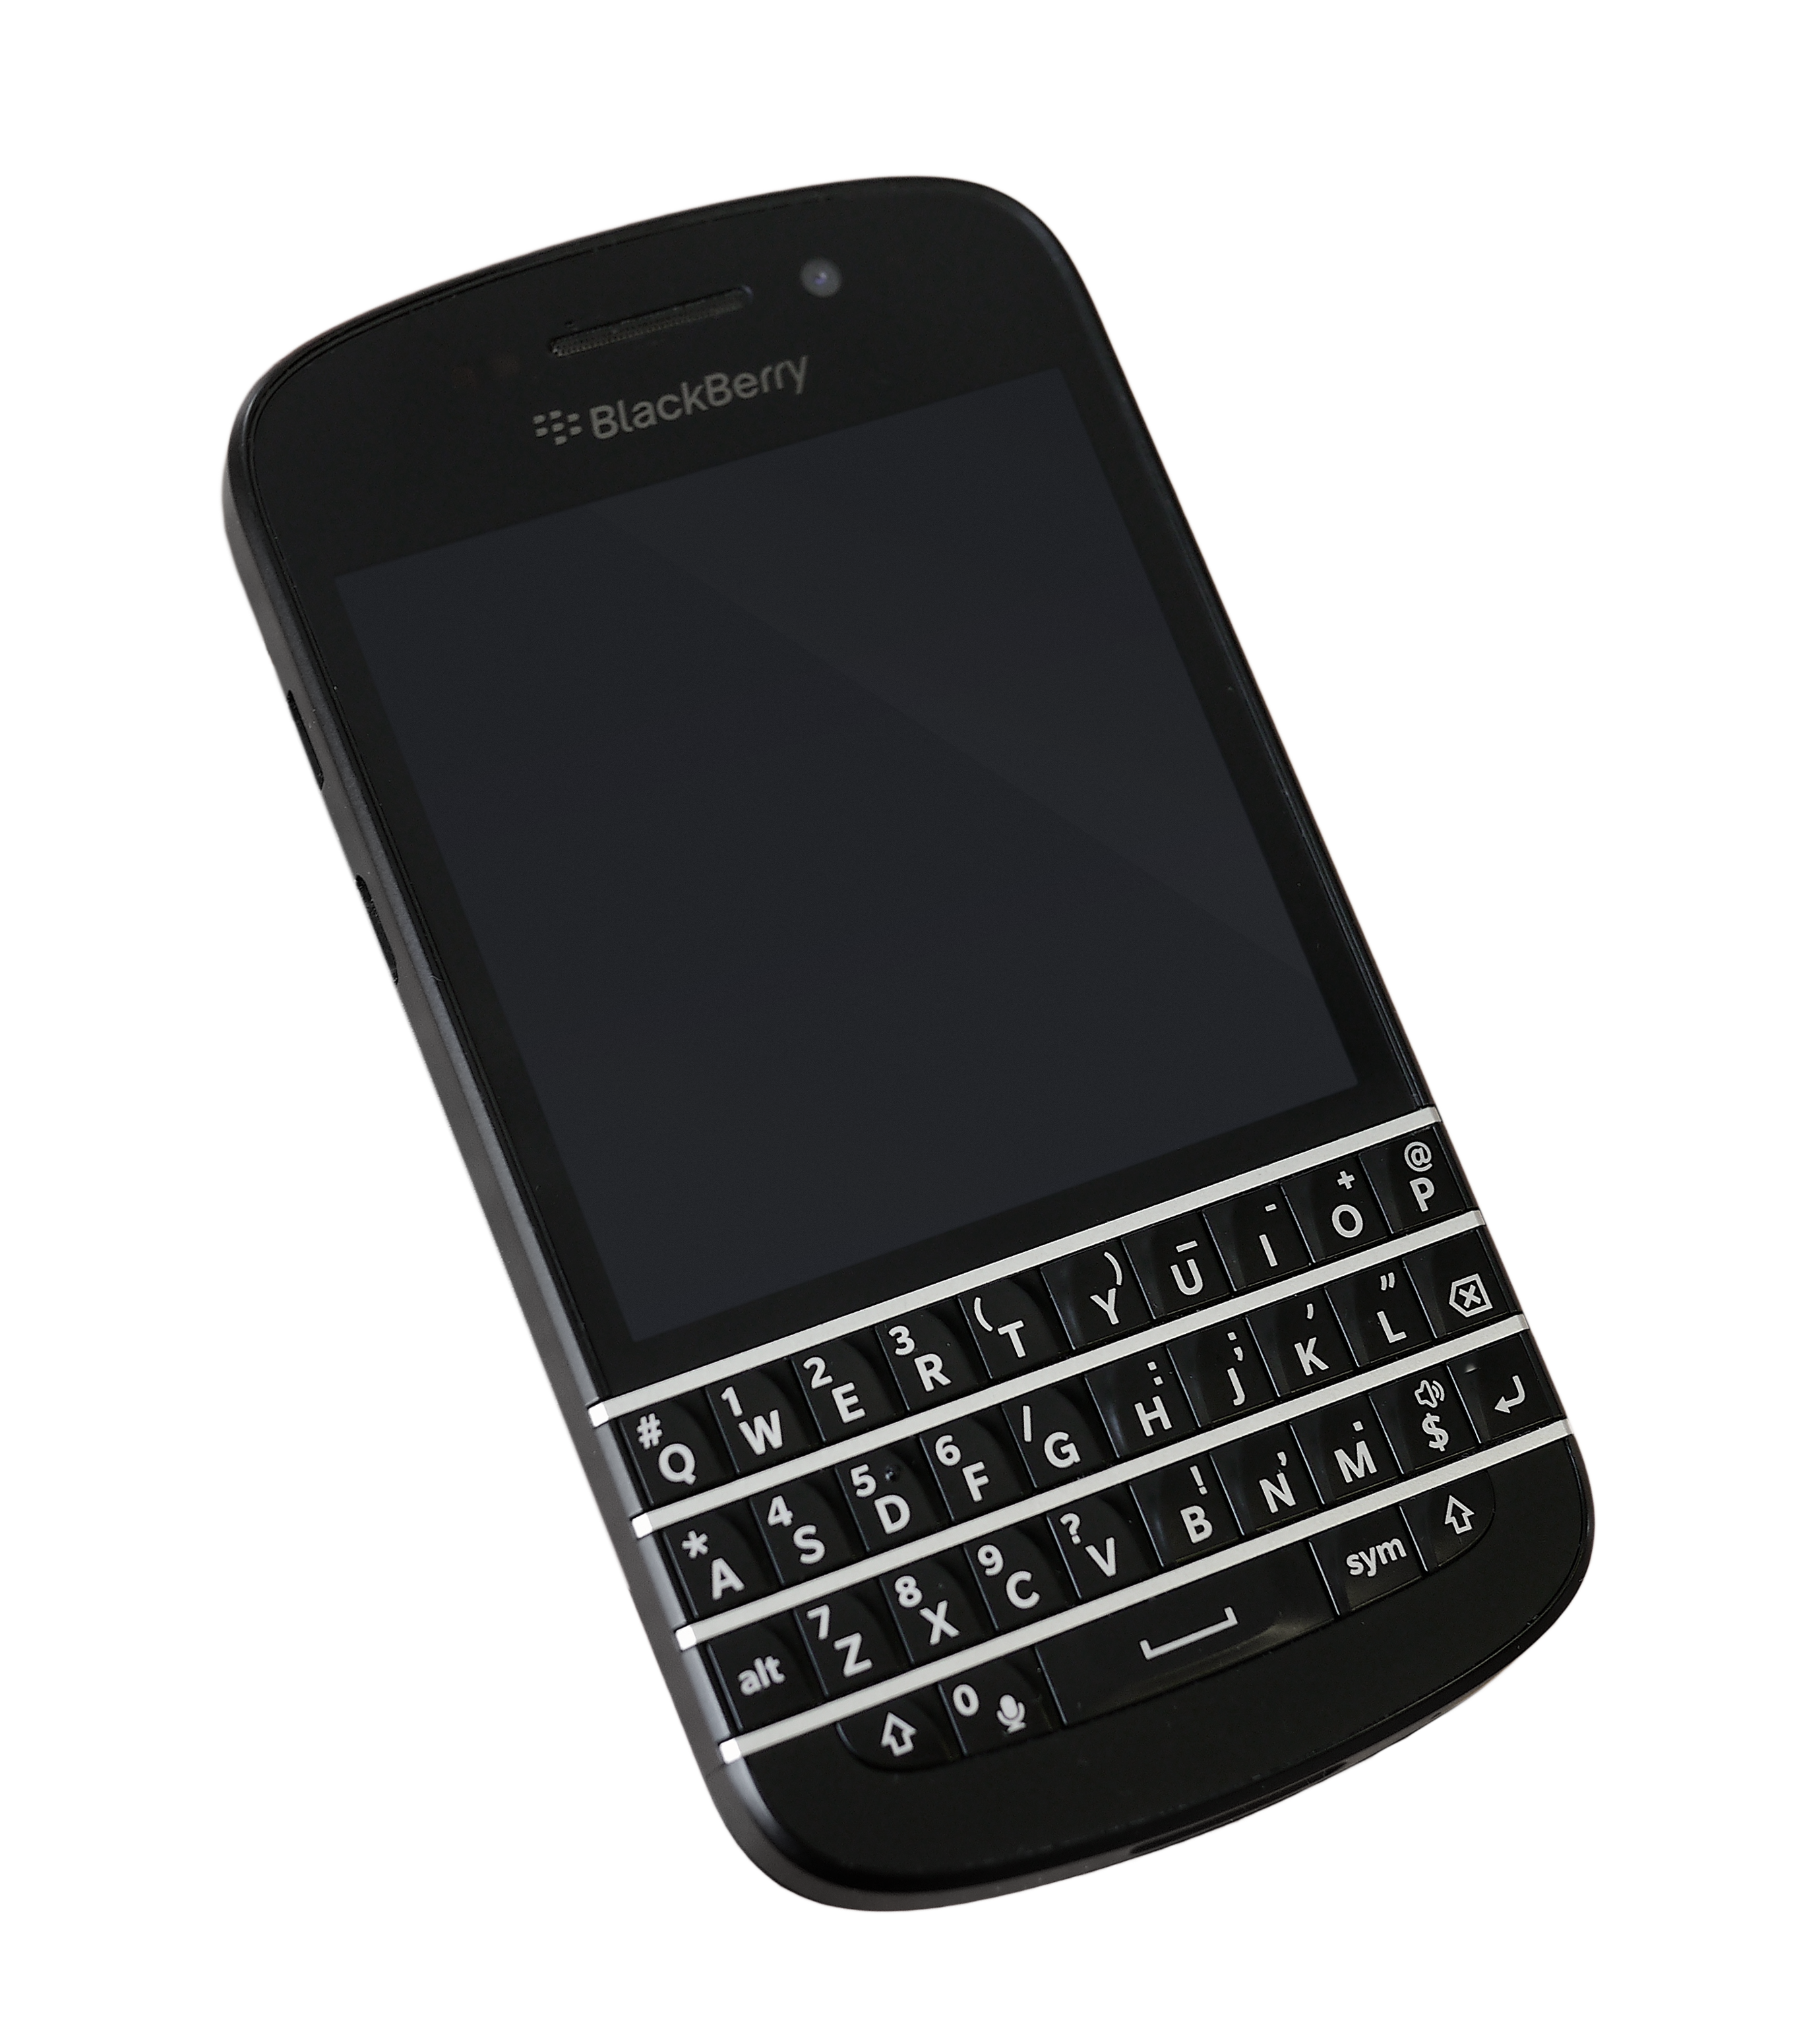 BlackBerry Q10 - Wikipedia